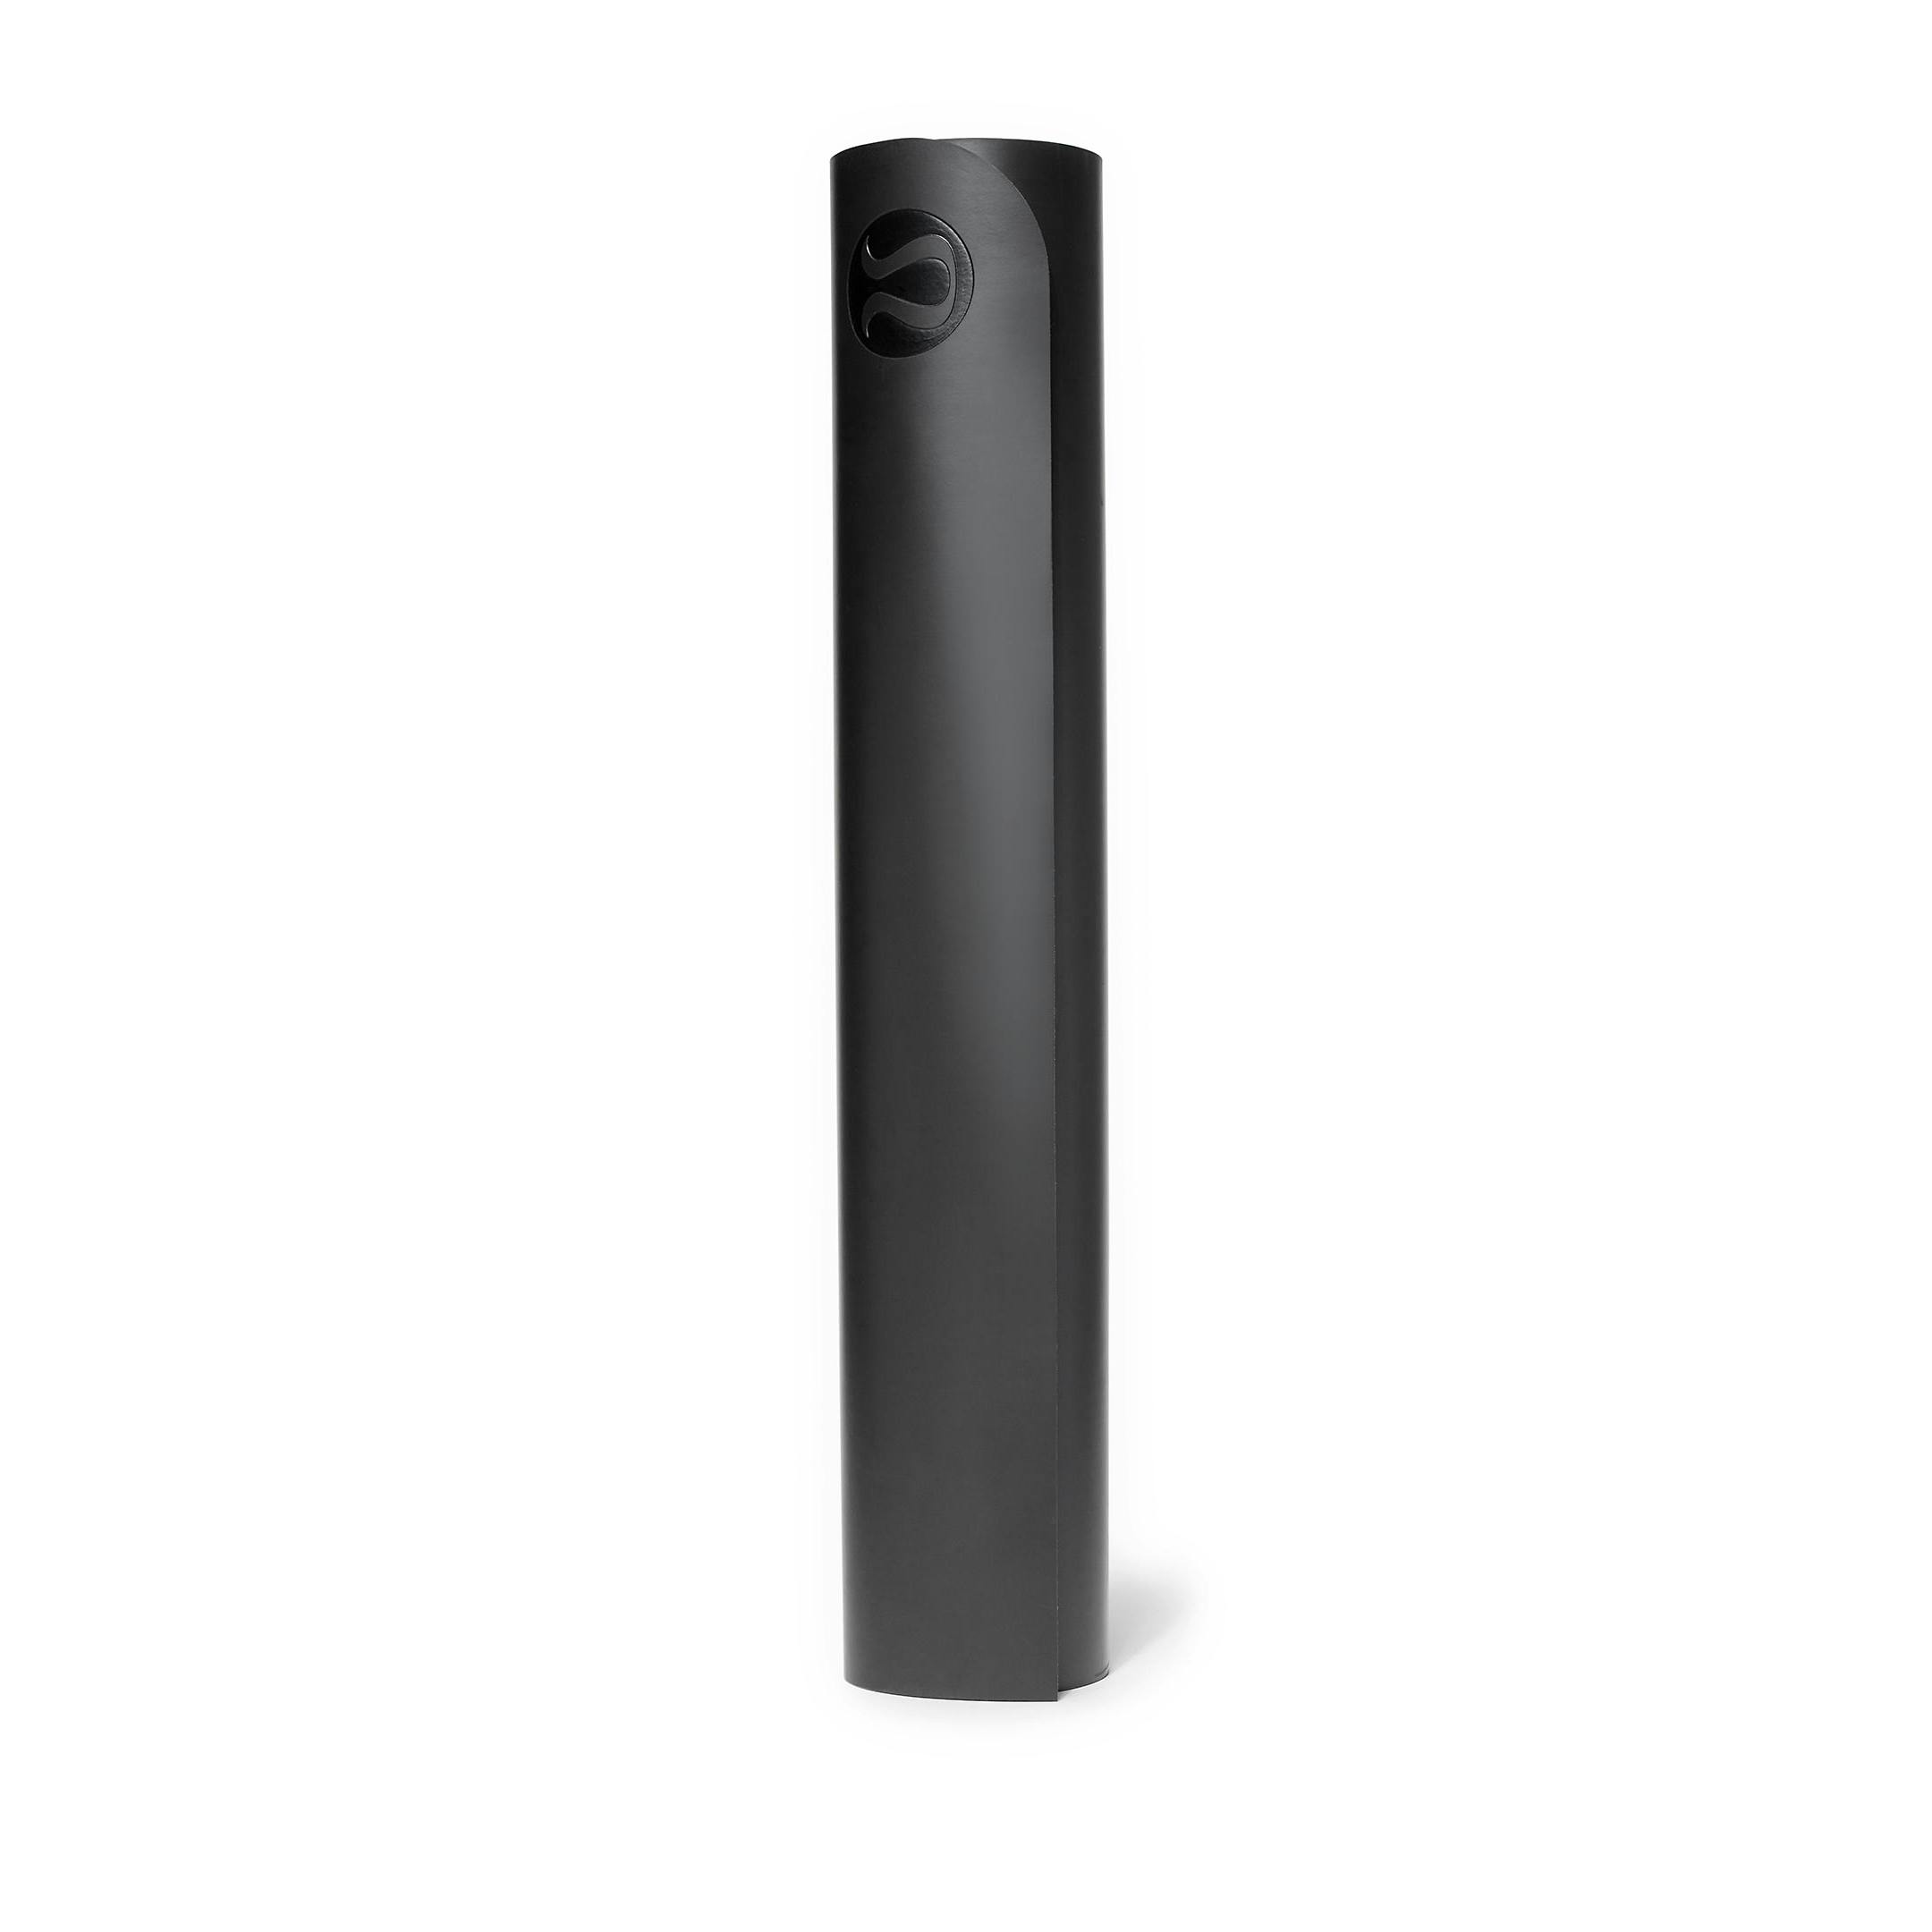 lululemon The Reversible Yoga Mat 5mm - Black, Gifts